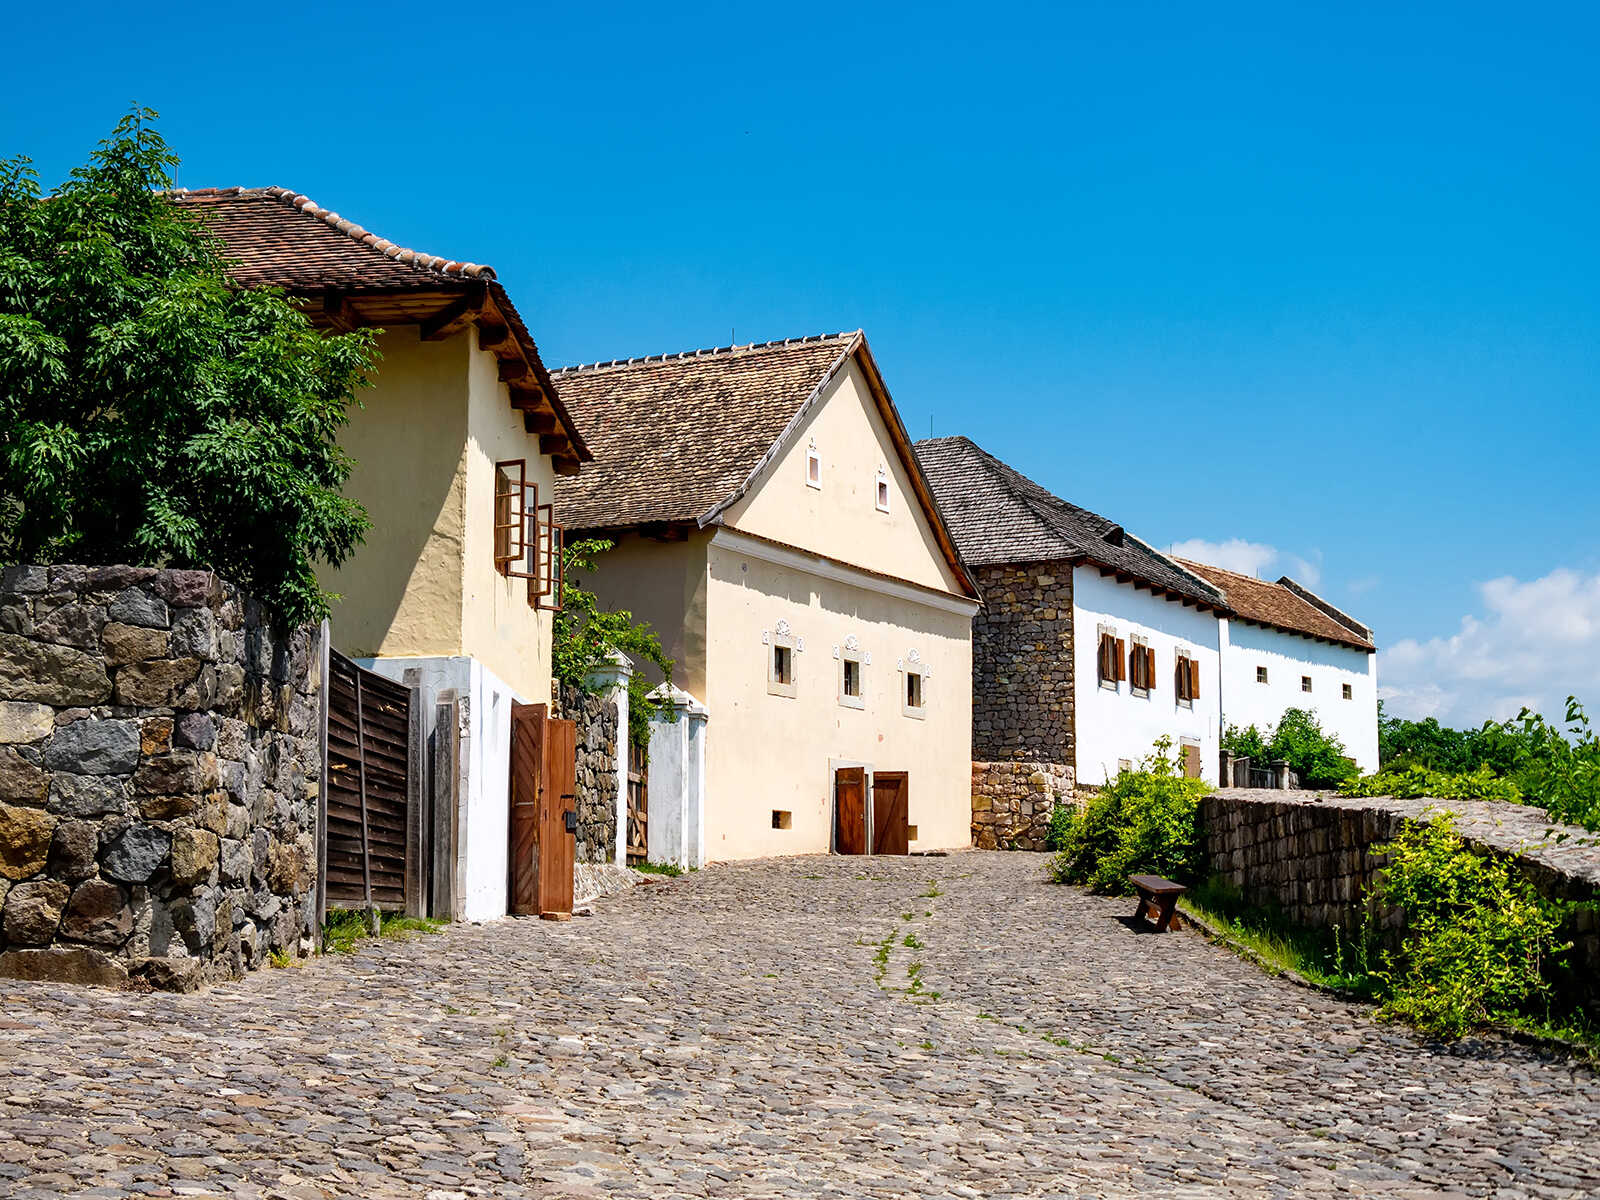 Szentendre Skanzen Village Museum